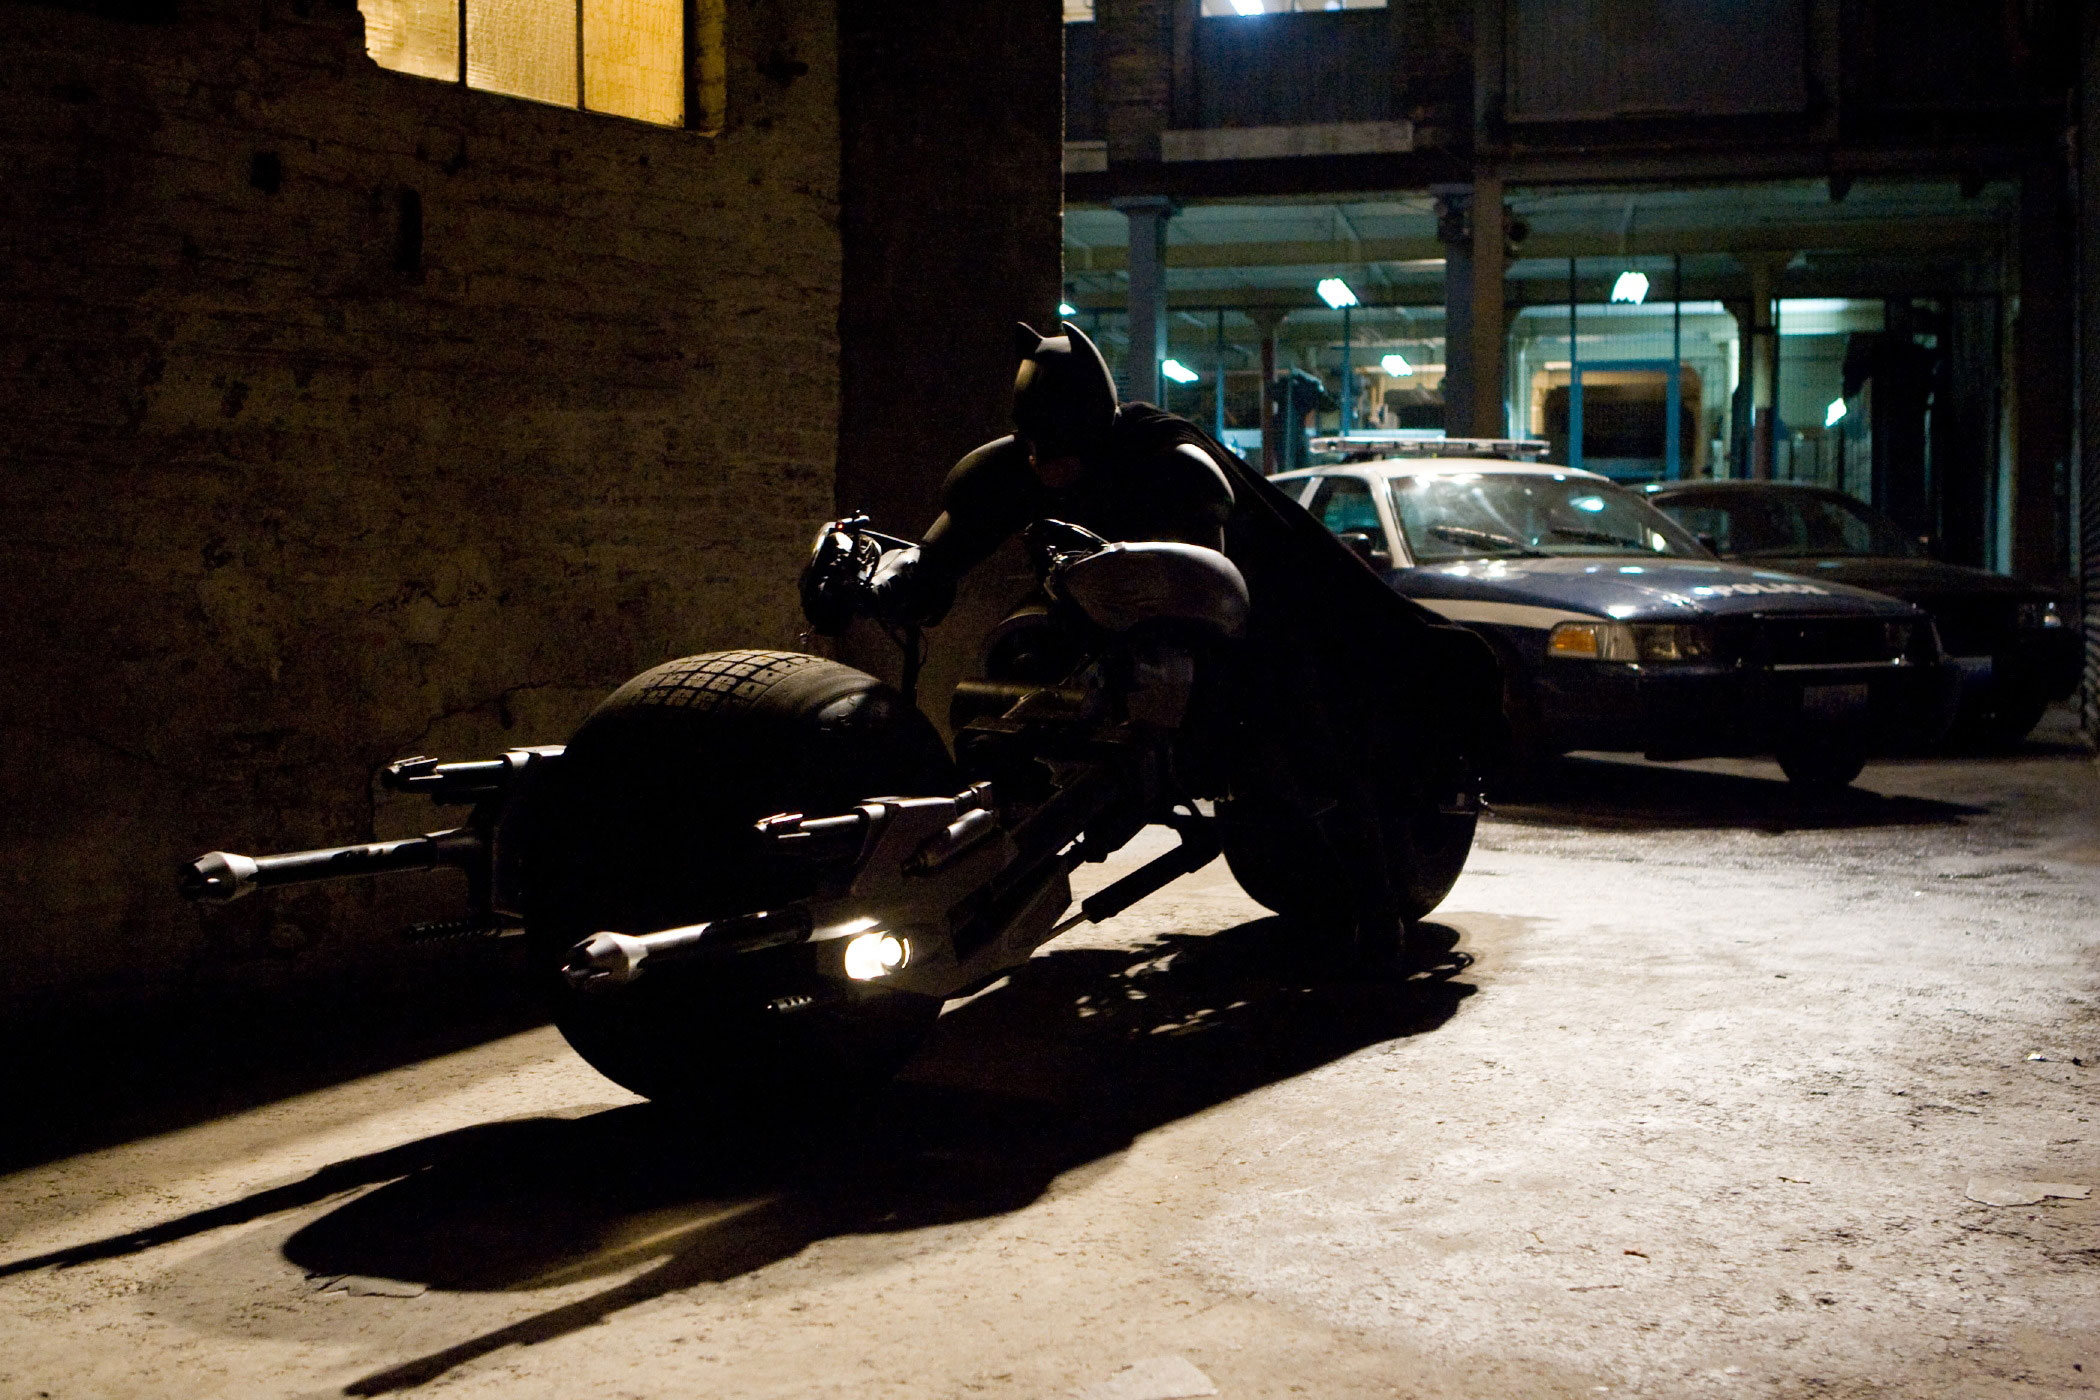 Batman standing tall in a dark cityscape at night.